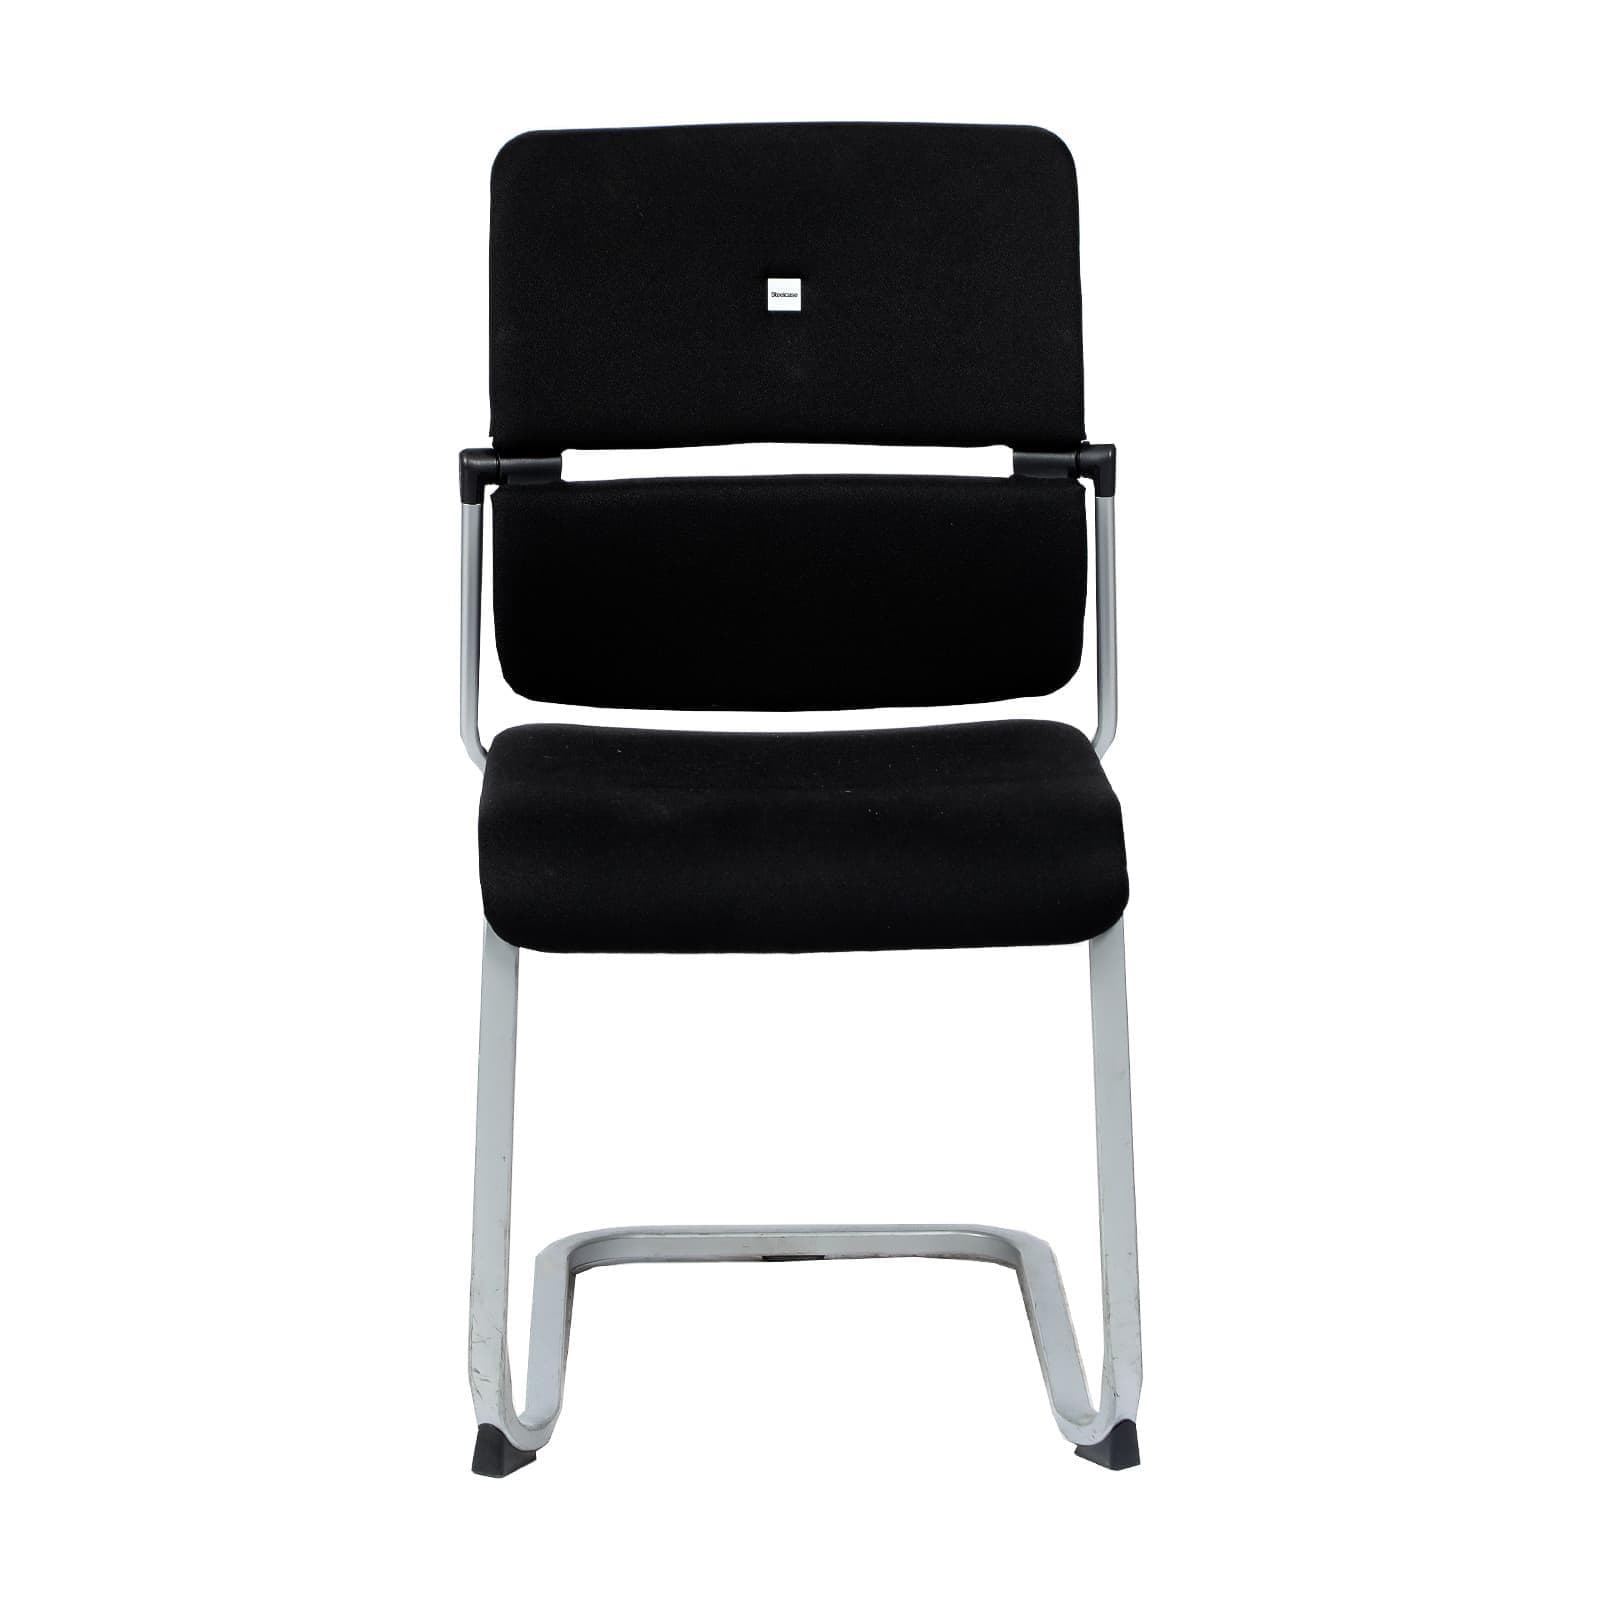 Chaise luge Steelcase occasion - Noir - 46 x 44 x 87 cm-Bluedigo